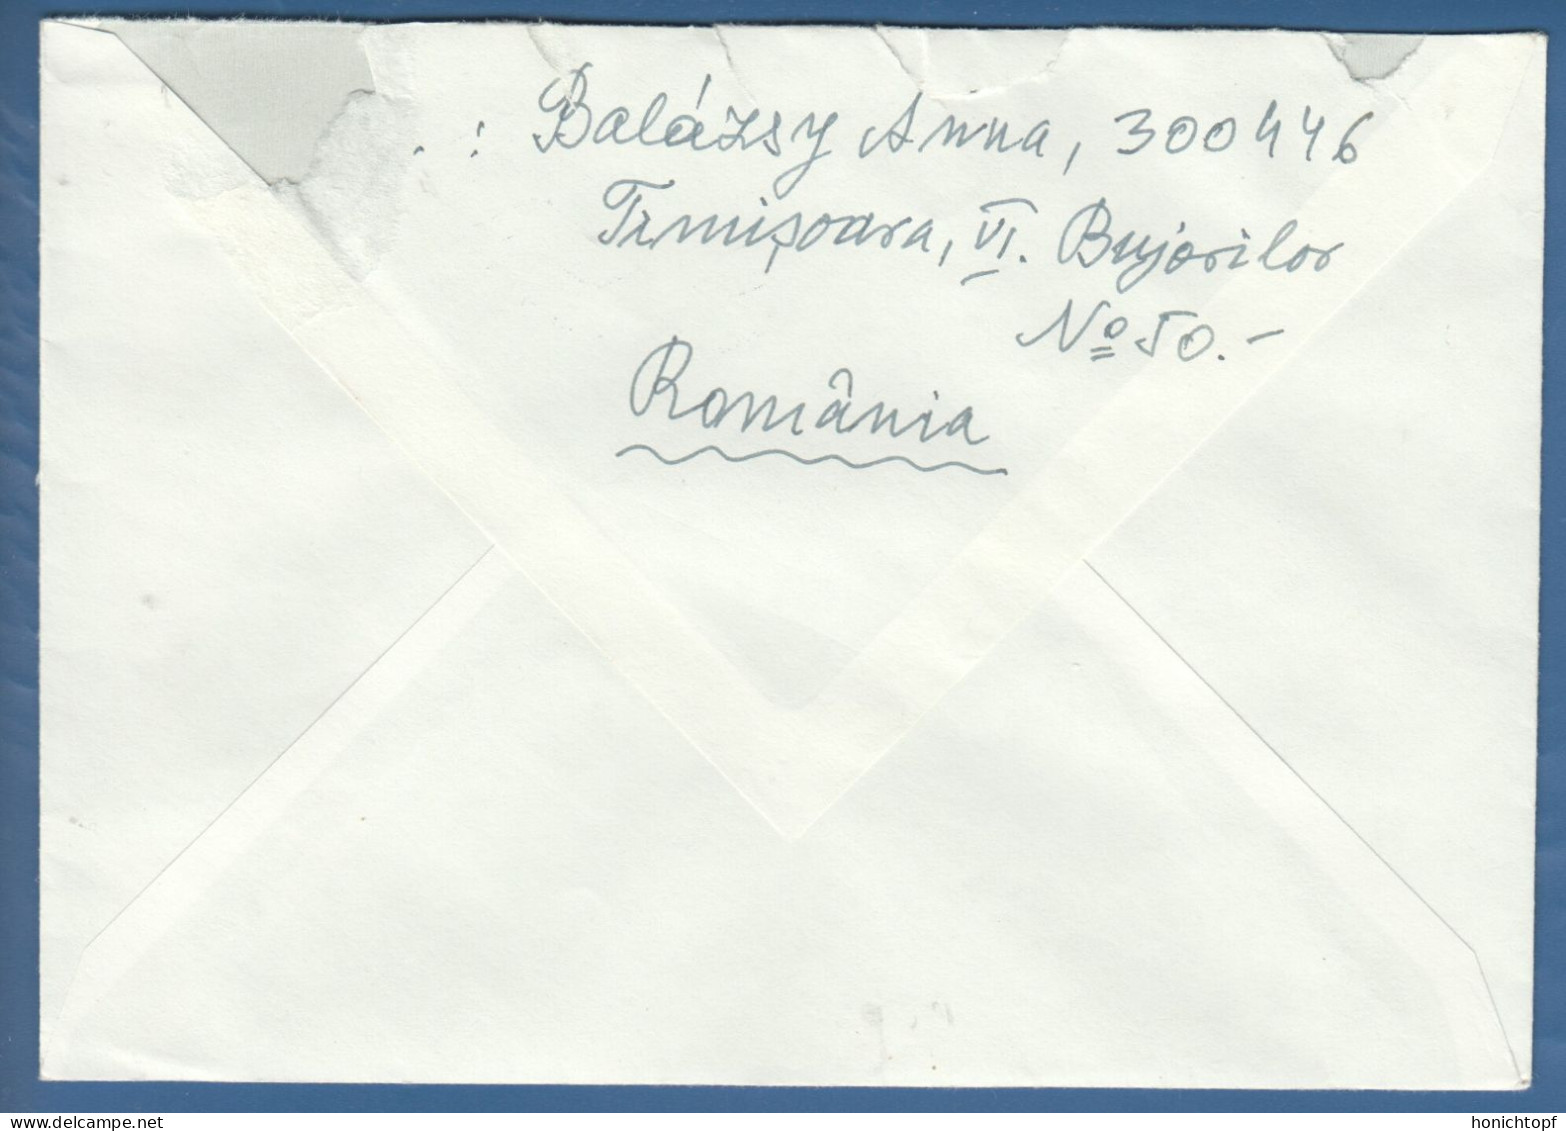 Rumänien; Brief Infla 2003; Timisoara; Romania - Briefe U. Dokumente